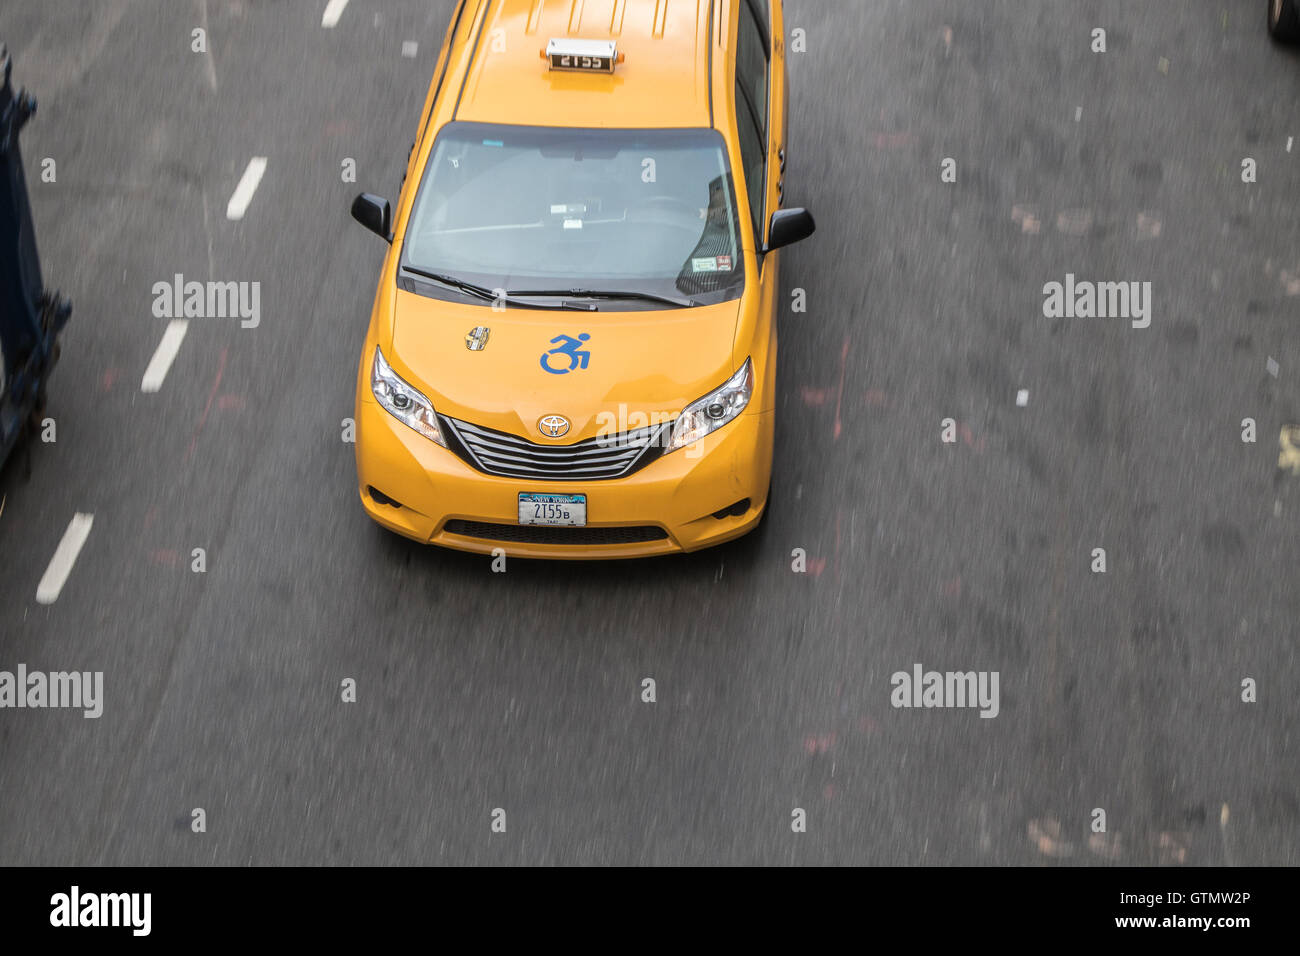 A yellow cab minivan in New York City Stock Photo